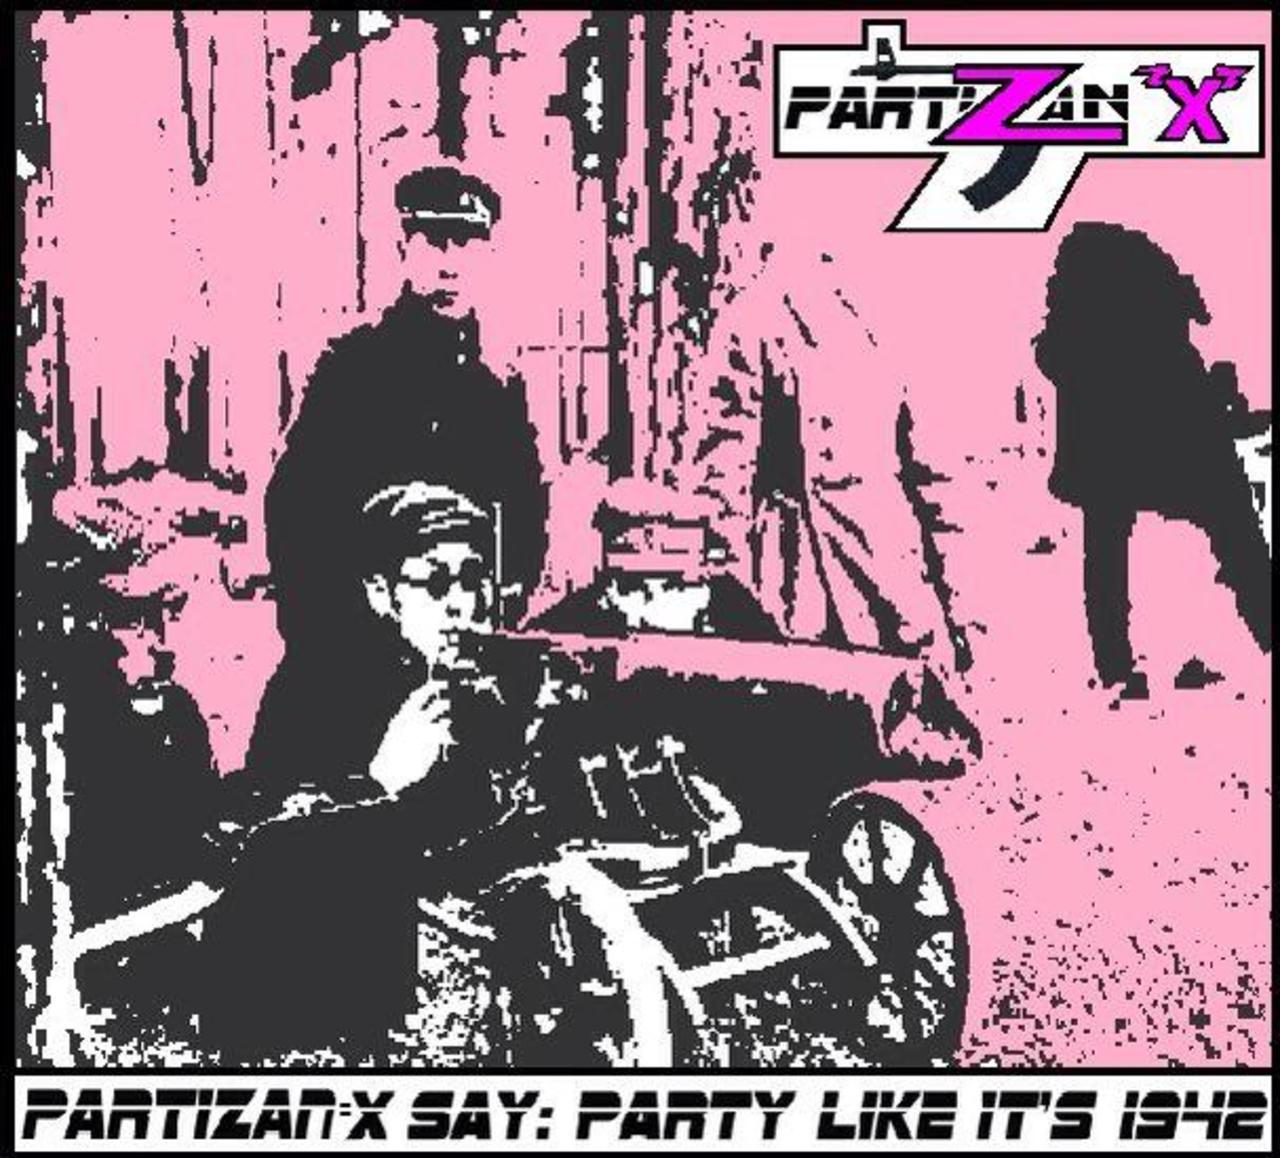 Partizan X say: Party like it's 1942.
@partizan_x #streetart #stickerart #stickers #stickerbomb #poximity #graffiti http://t.co/Fp195DnmXR